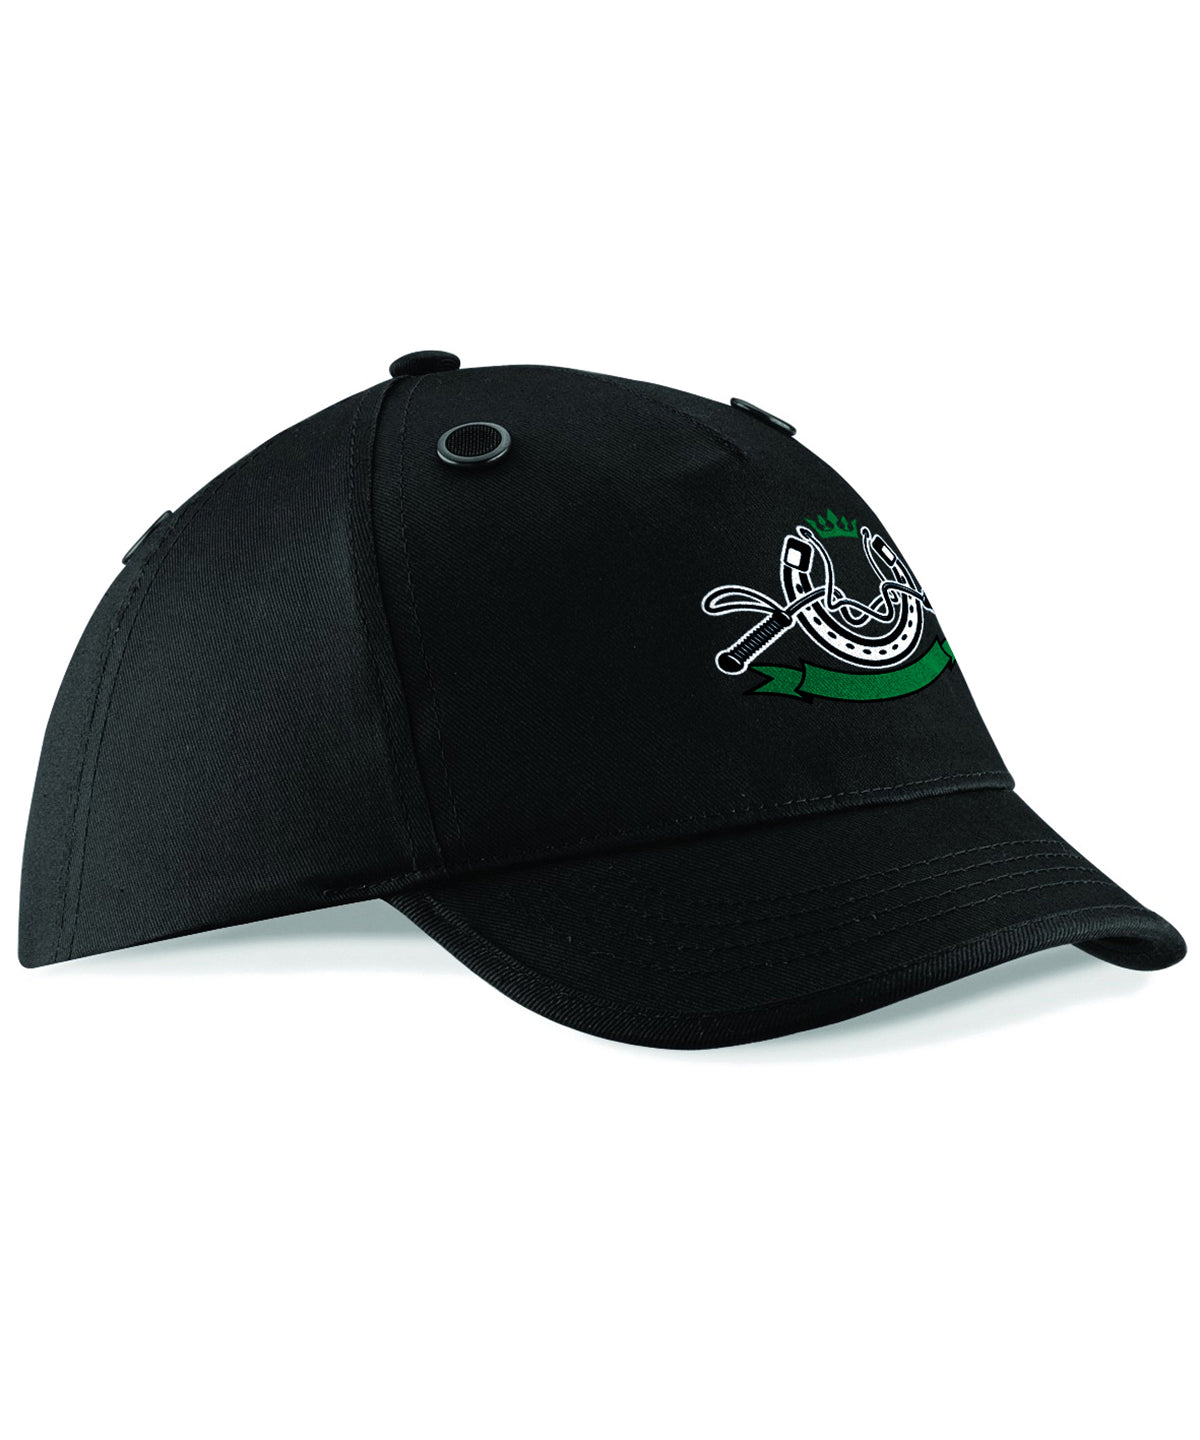 Personalised Caps - Black Beechfield EN812 bump cap